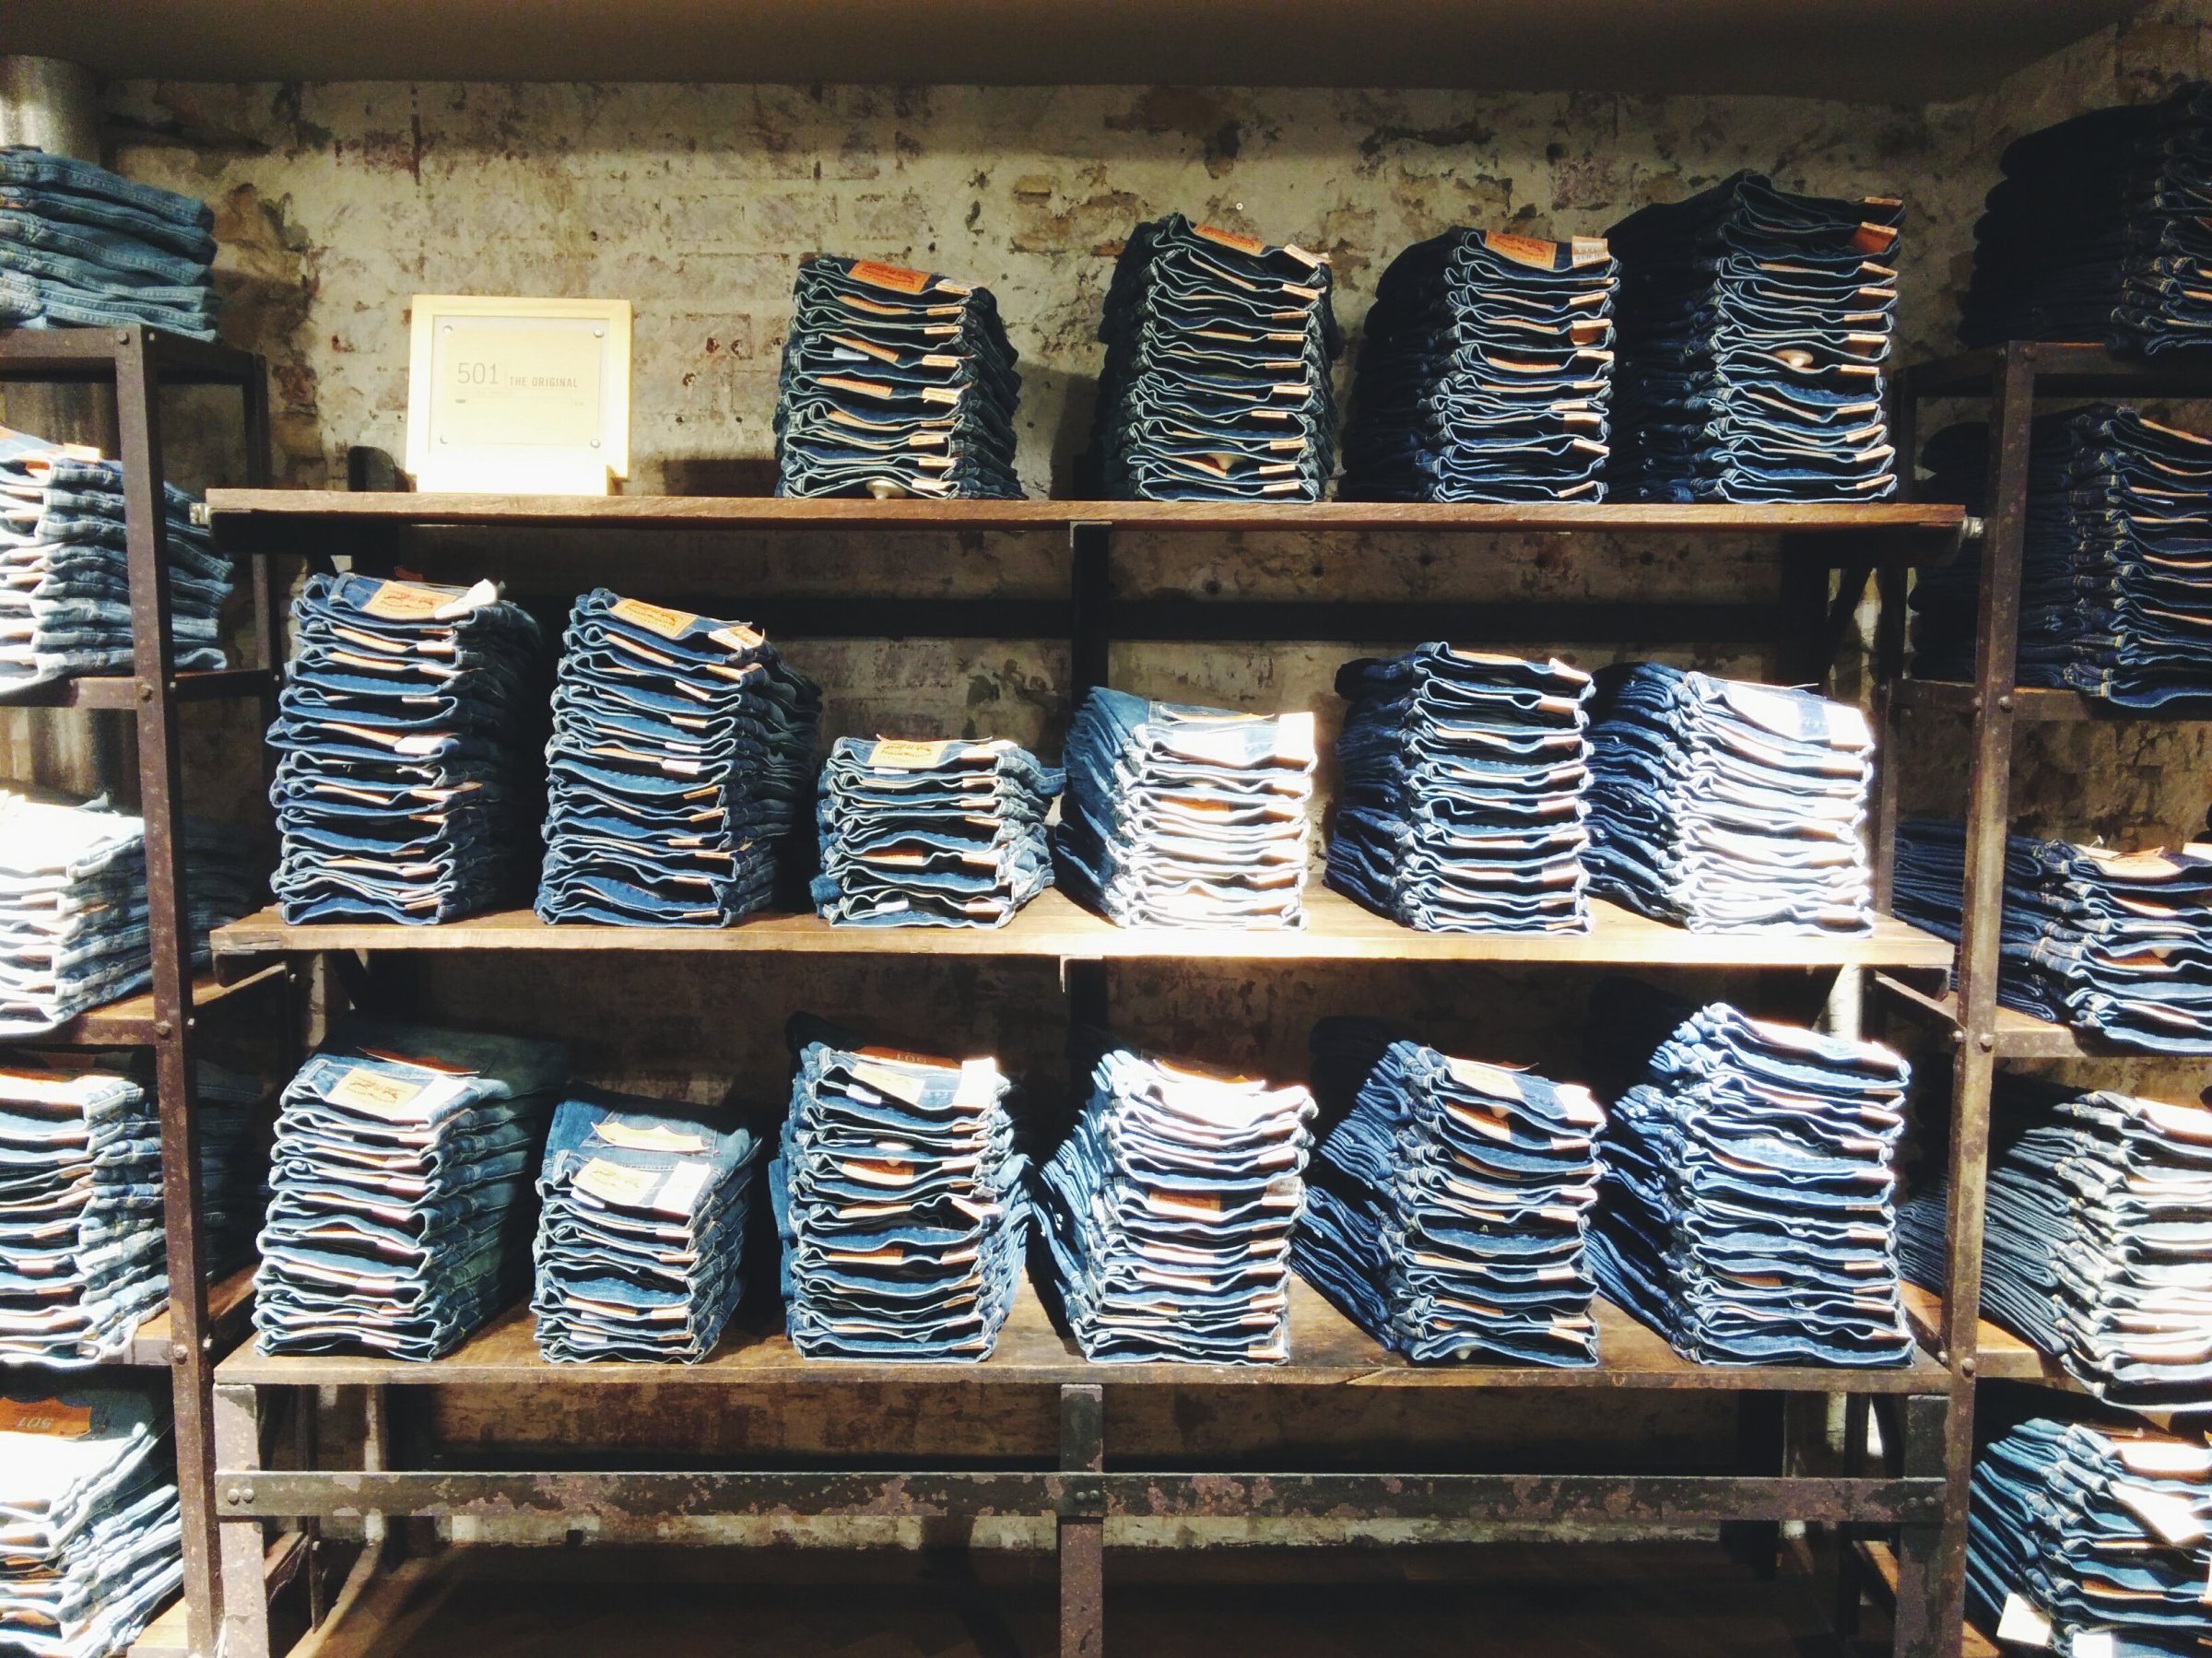 Folded Jeans Kept On Shelves In Shop